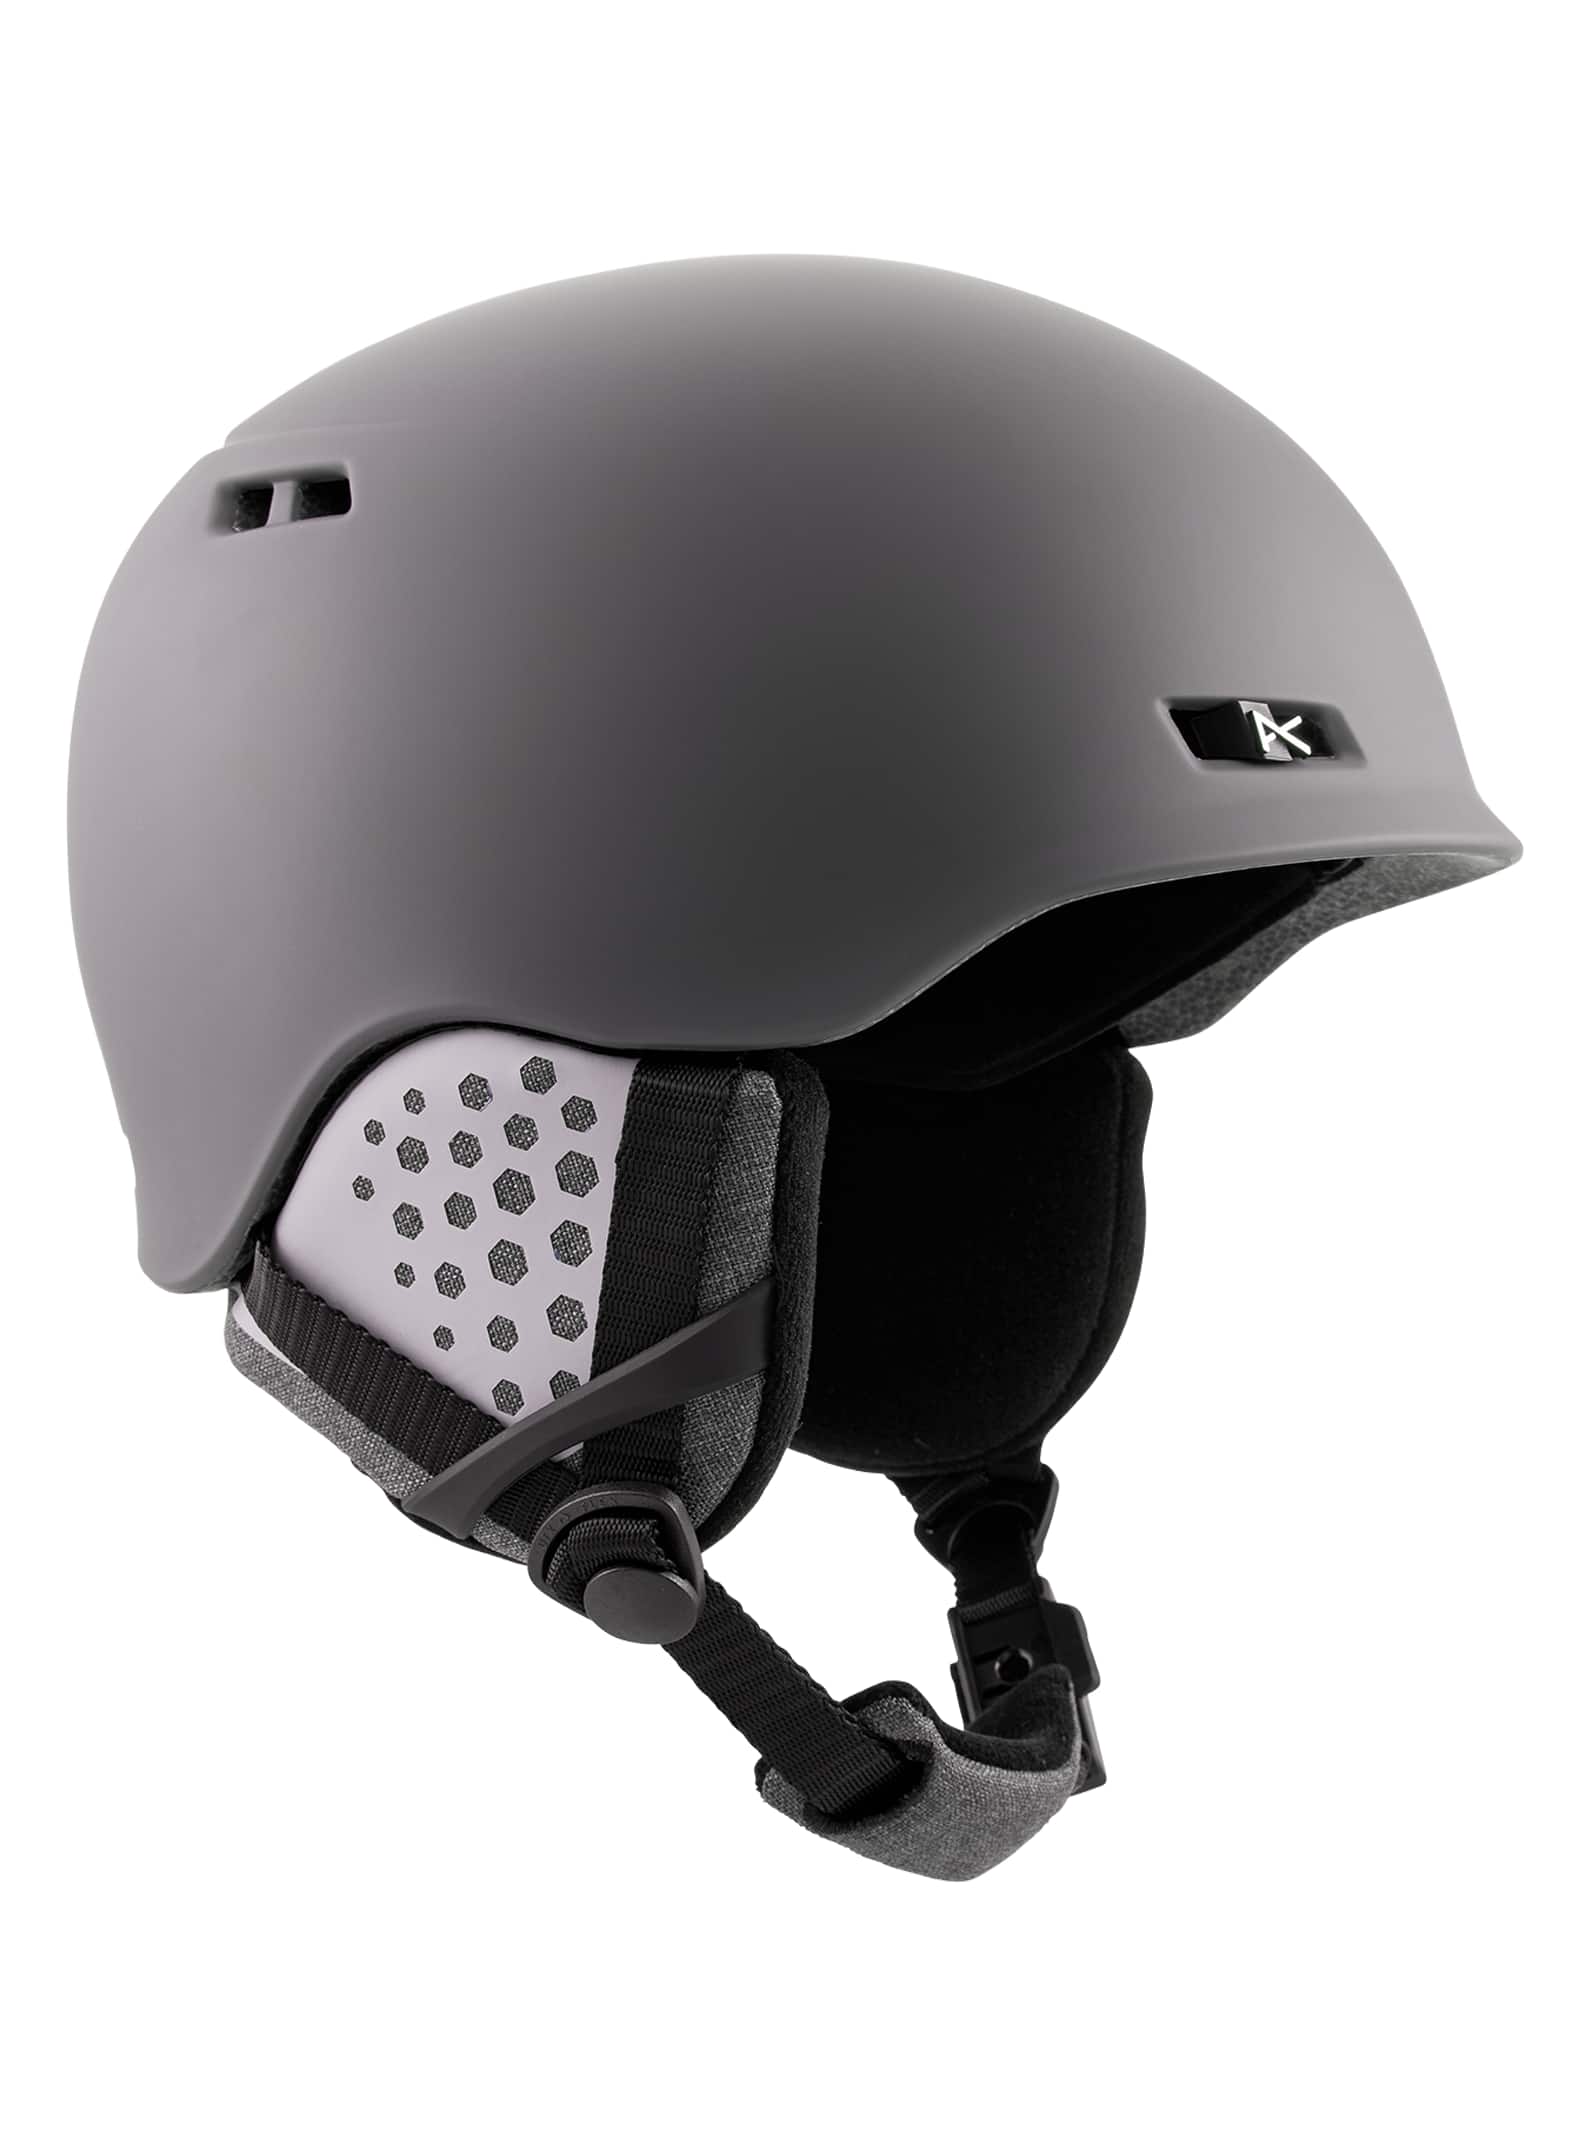 Snowboard Helmet Trip Black 2020 Anon Rodan Ski 